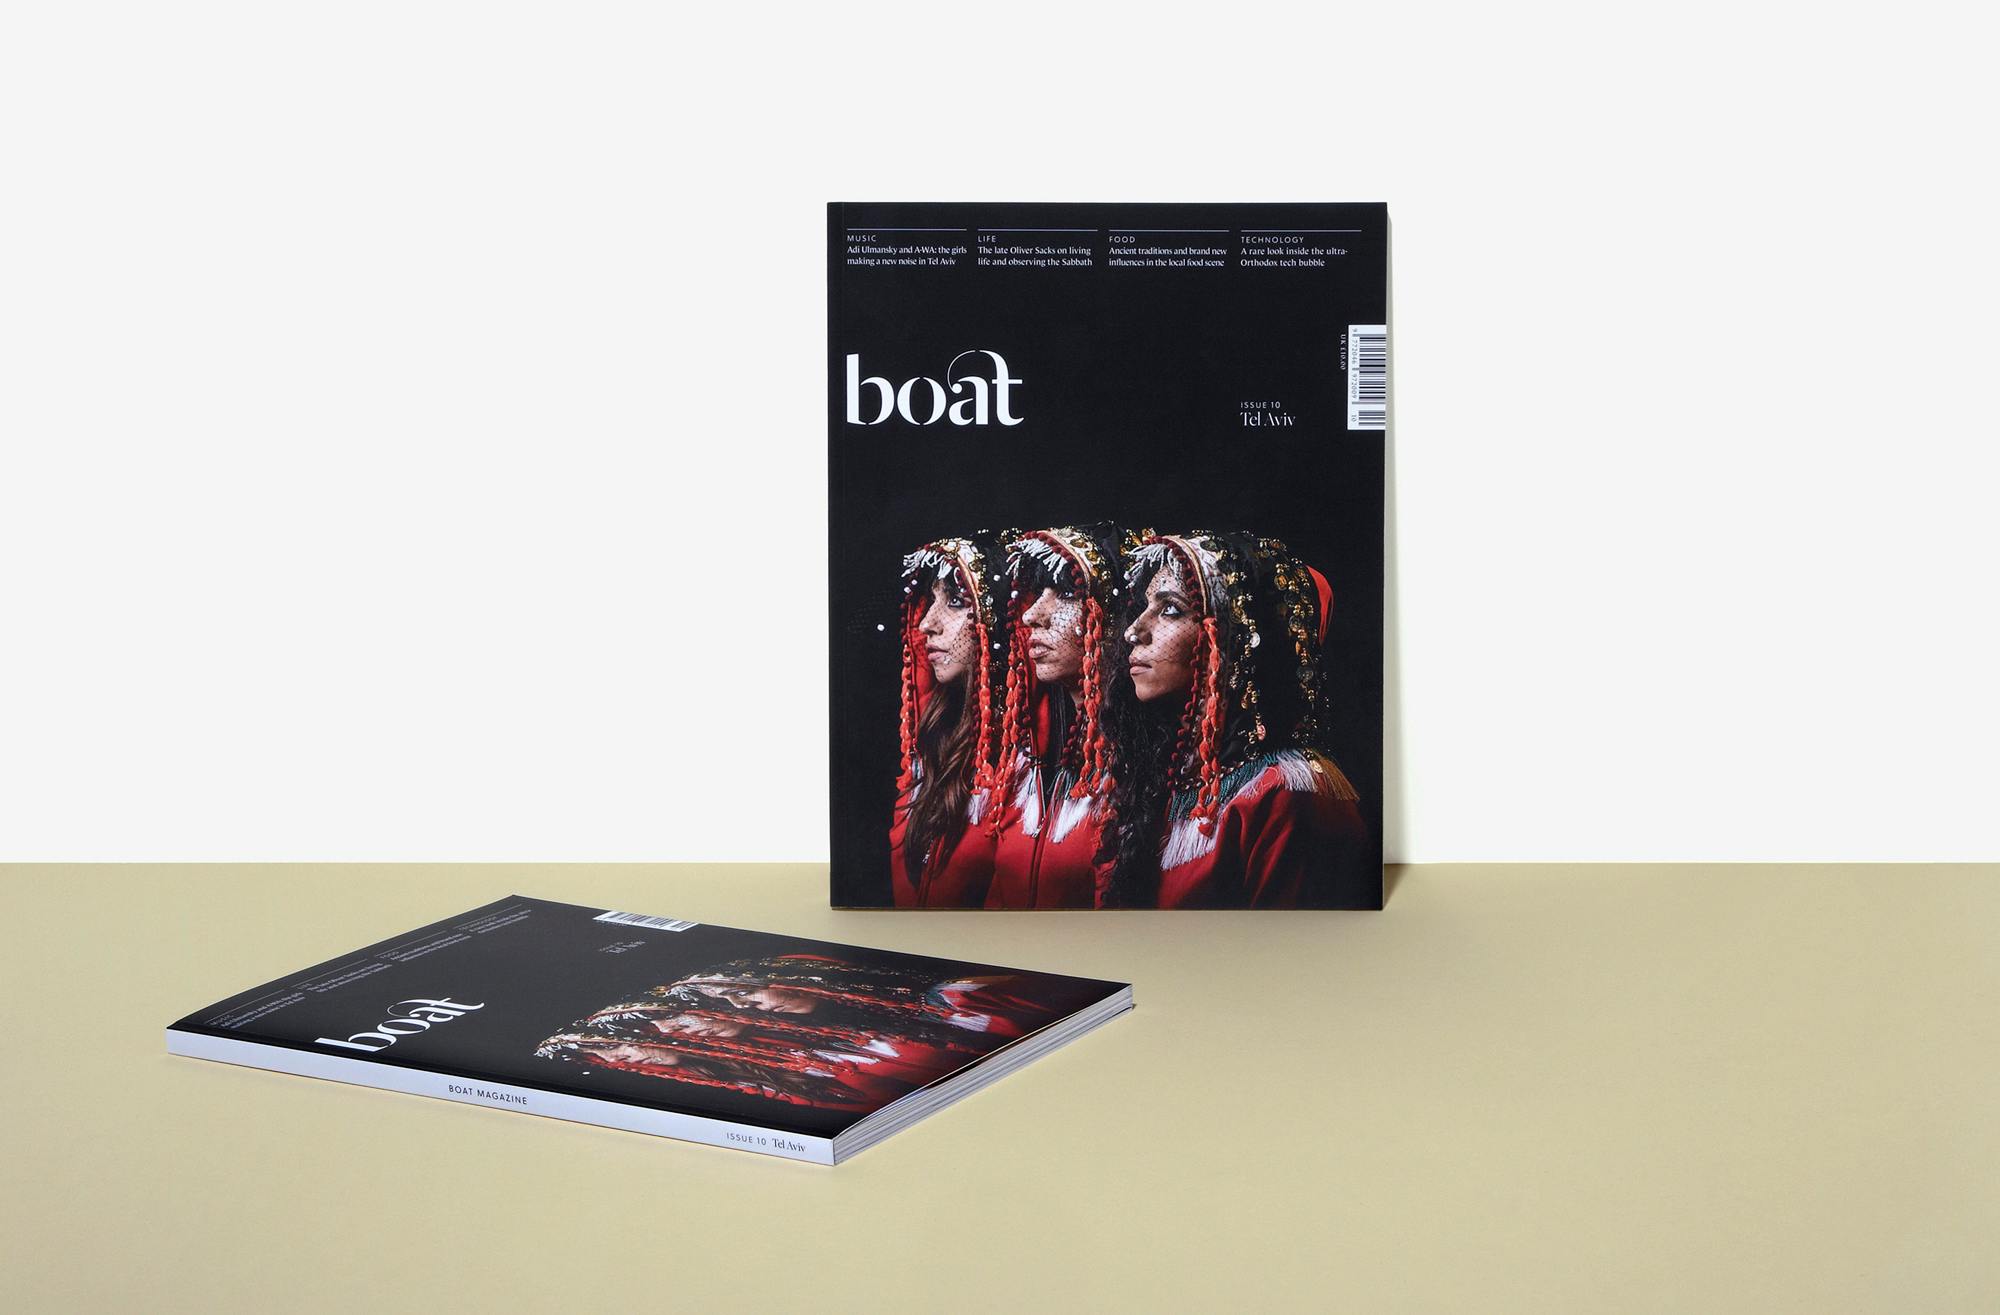 Travel Magazine Boat, designed by Extract Studio